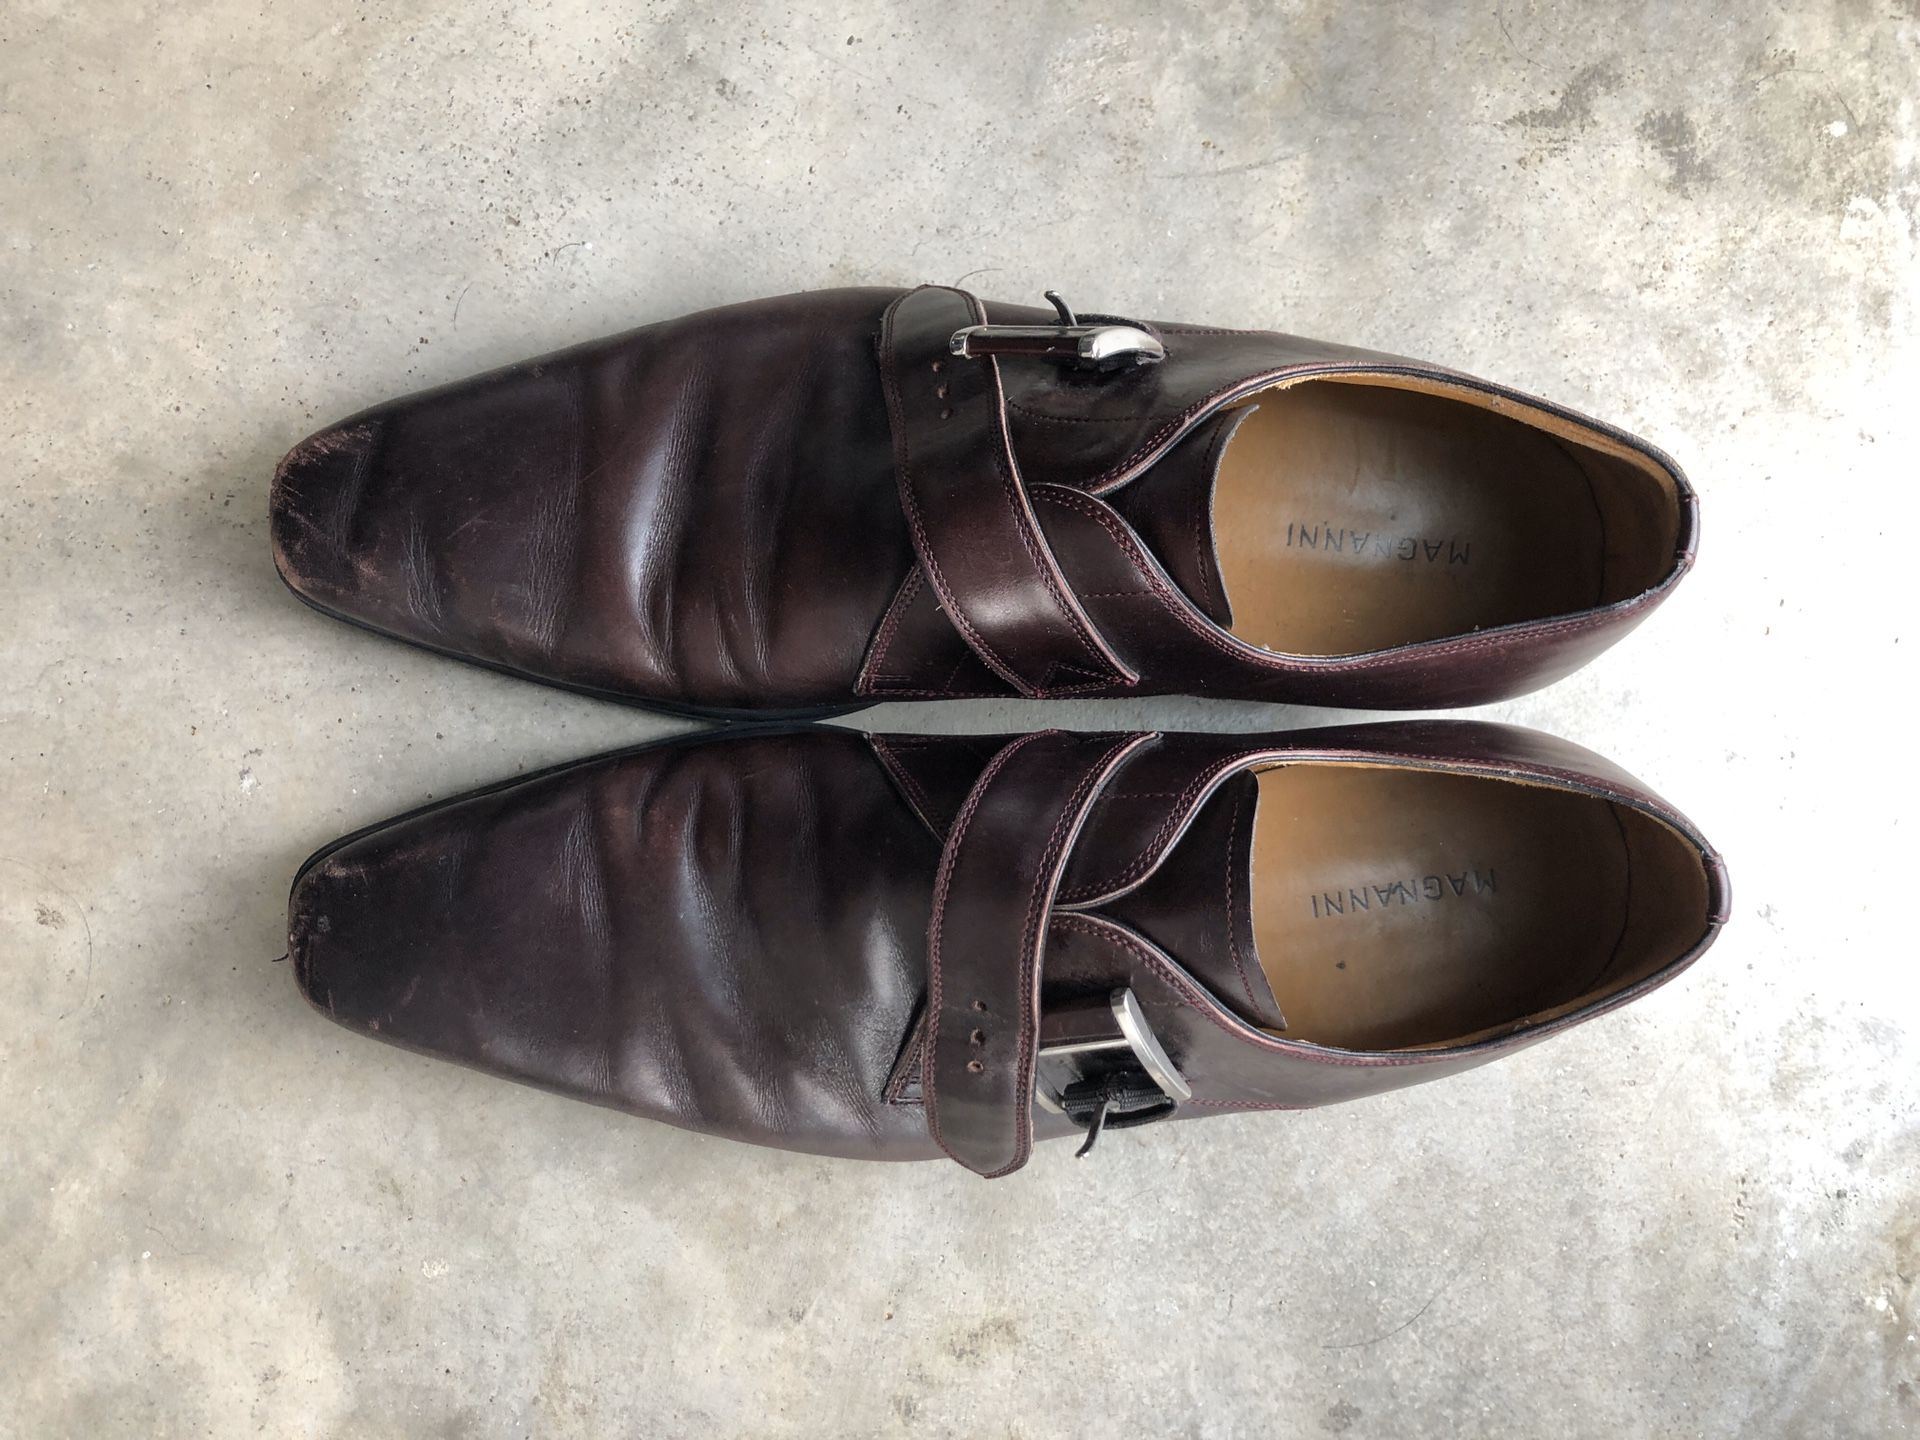 Magnanni dress shoes burgundy